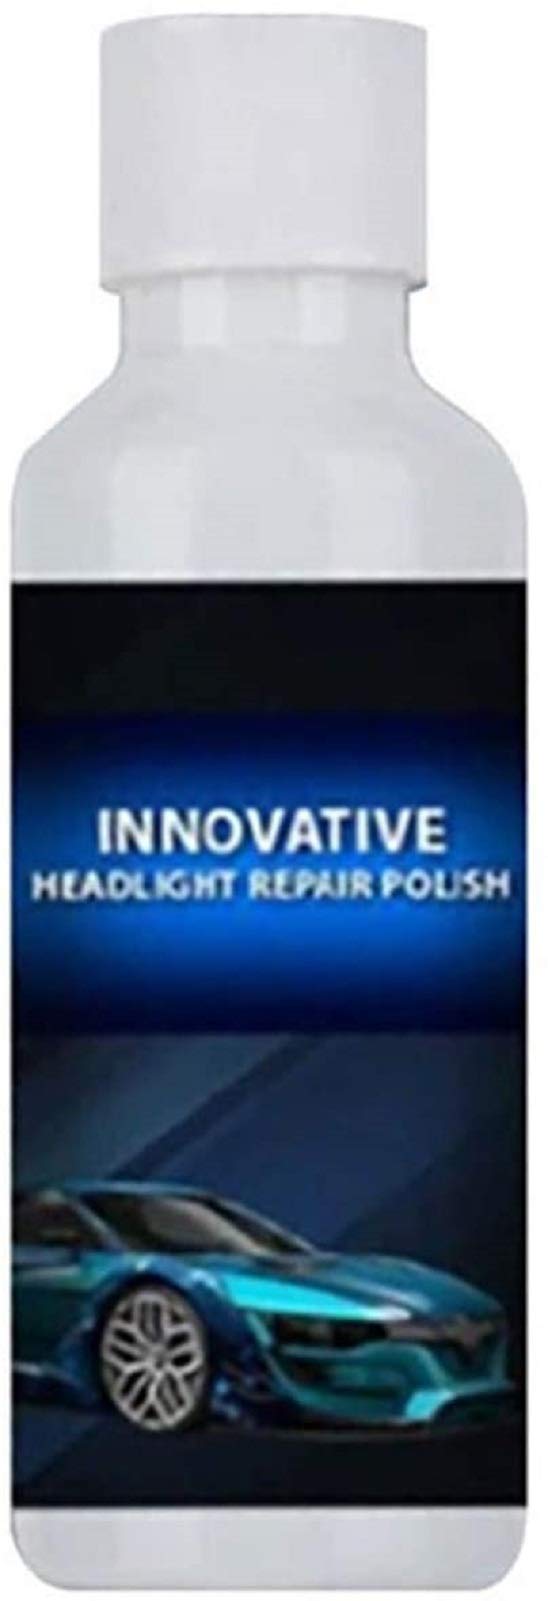 Sinye Headlight Renewal Polish,20ml Innovative Headlight Repair Polish,Durable Car Headlight Restoration Repair Coating for Car Headlight Taillight (Polnisch reparieren) von Sinye